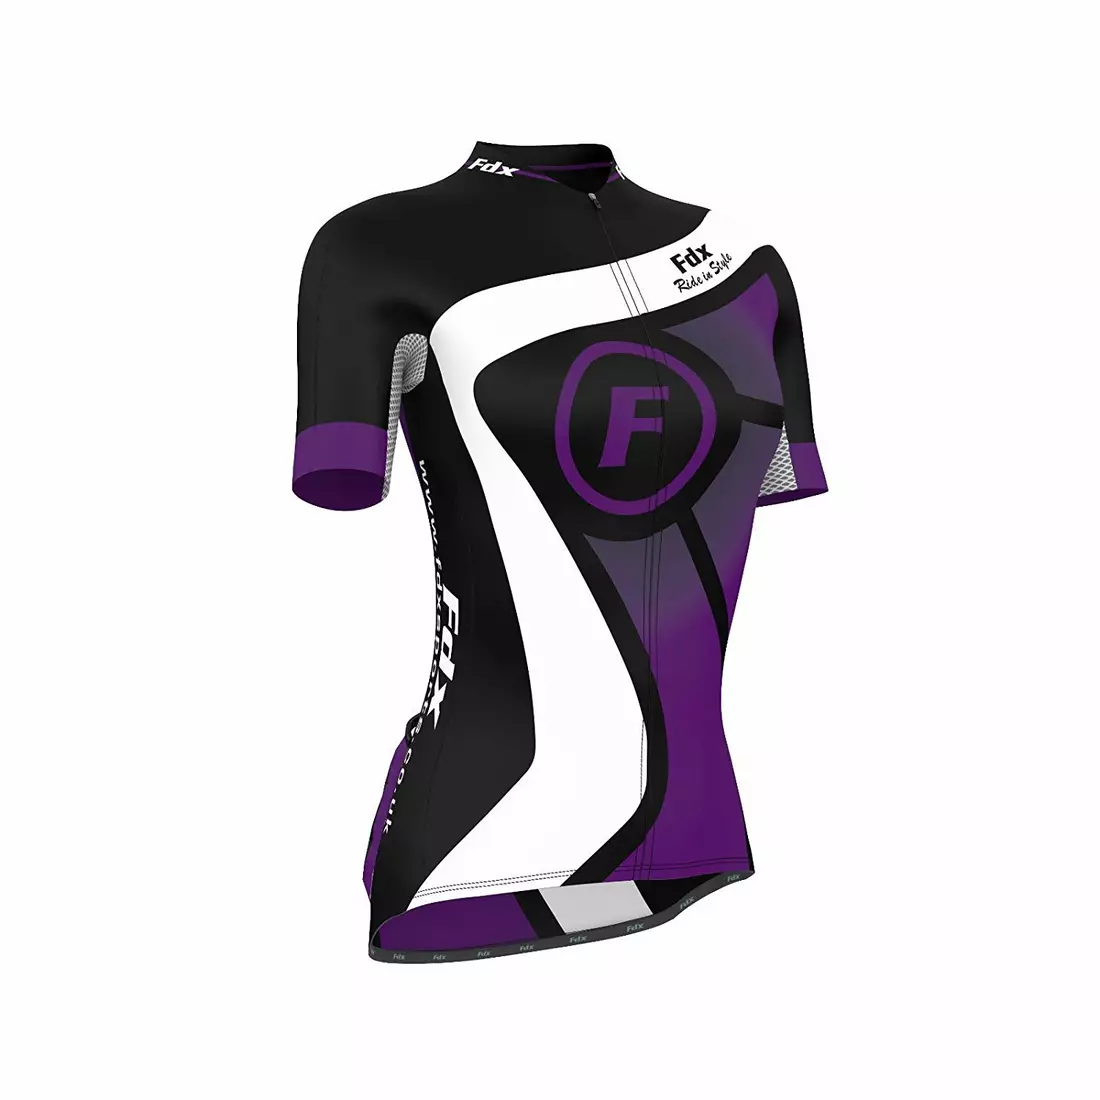 FDX 1020 women's bike set black and purple